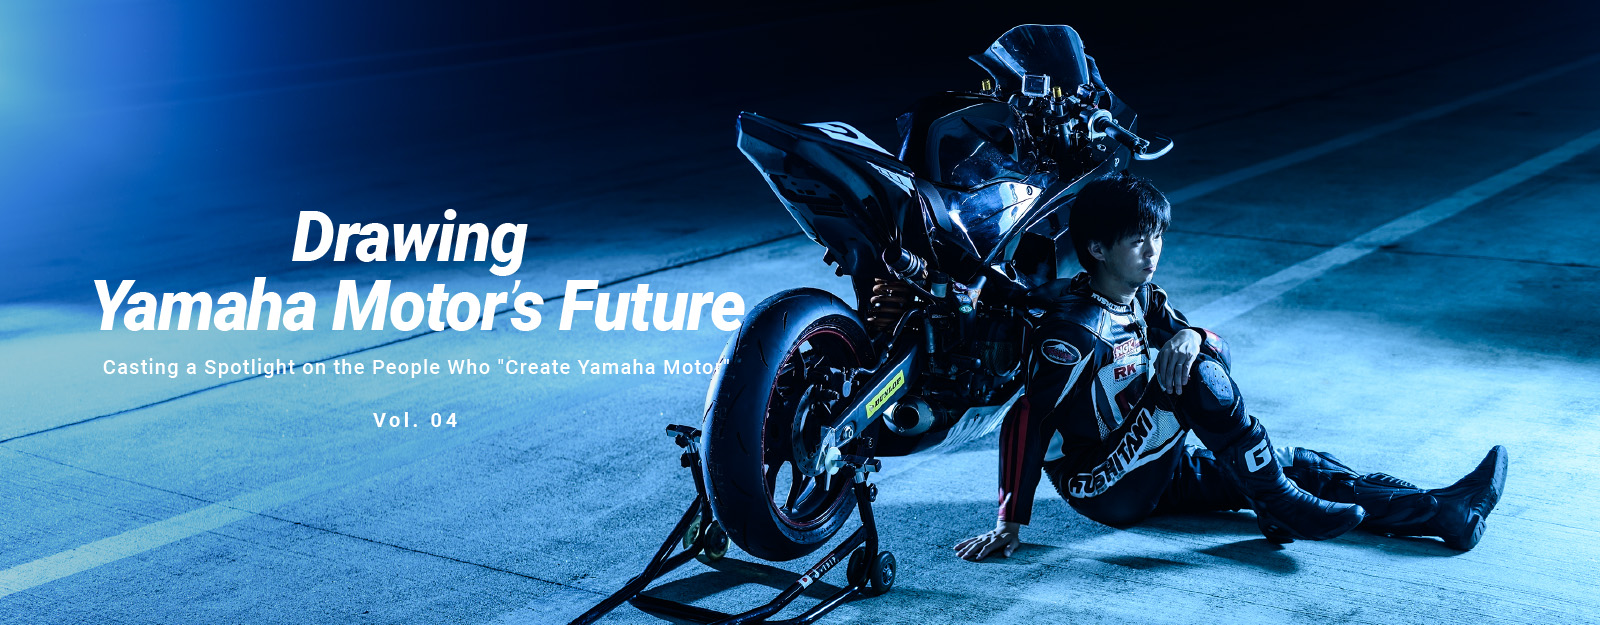 Drawing Yamaha’s Future -Casting a Spotlight on the People Who “Create Yamaha” Vol. 04